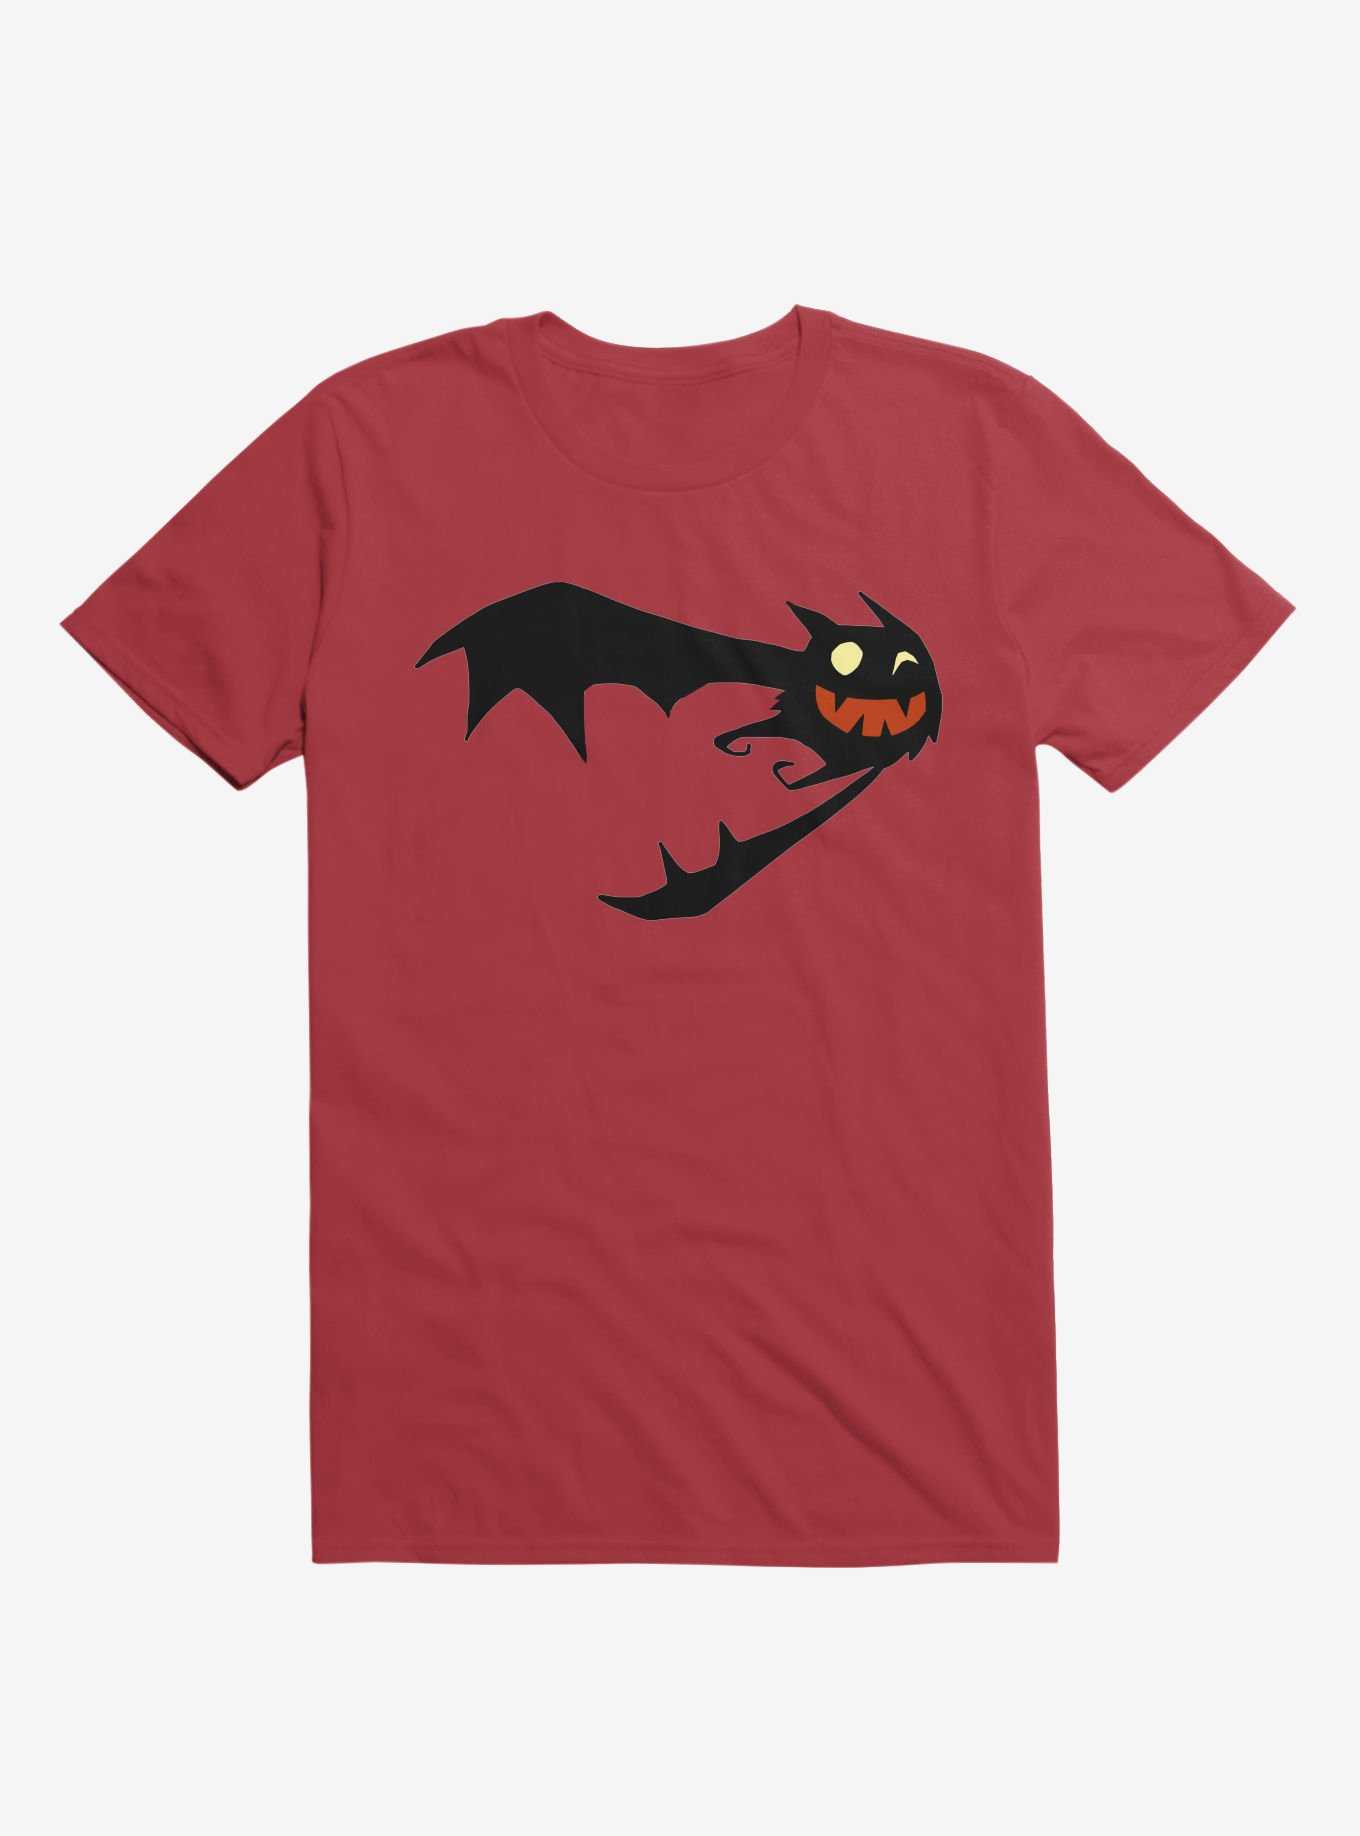 Charming Little Bat Red T-Shirt, , hi-res